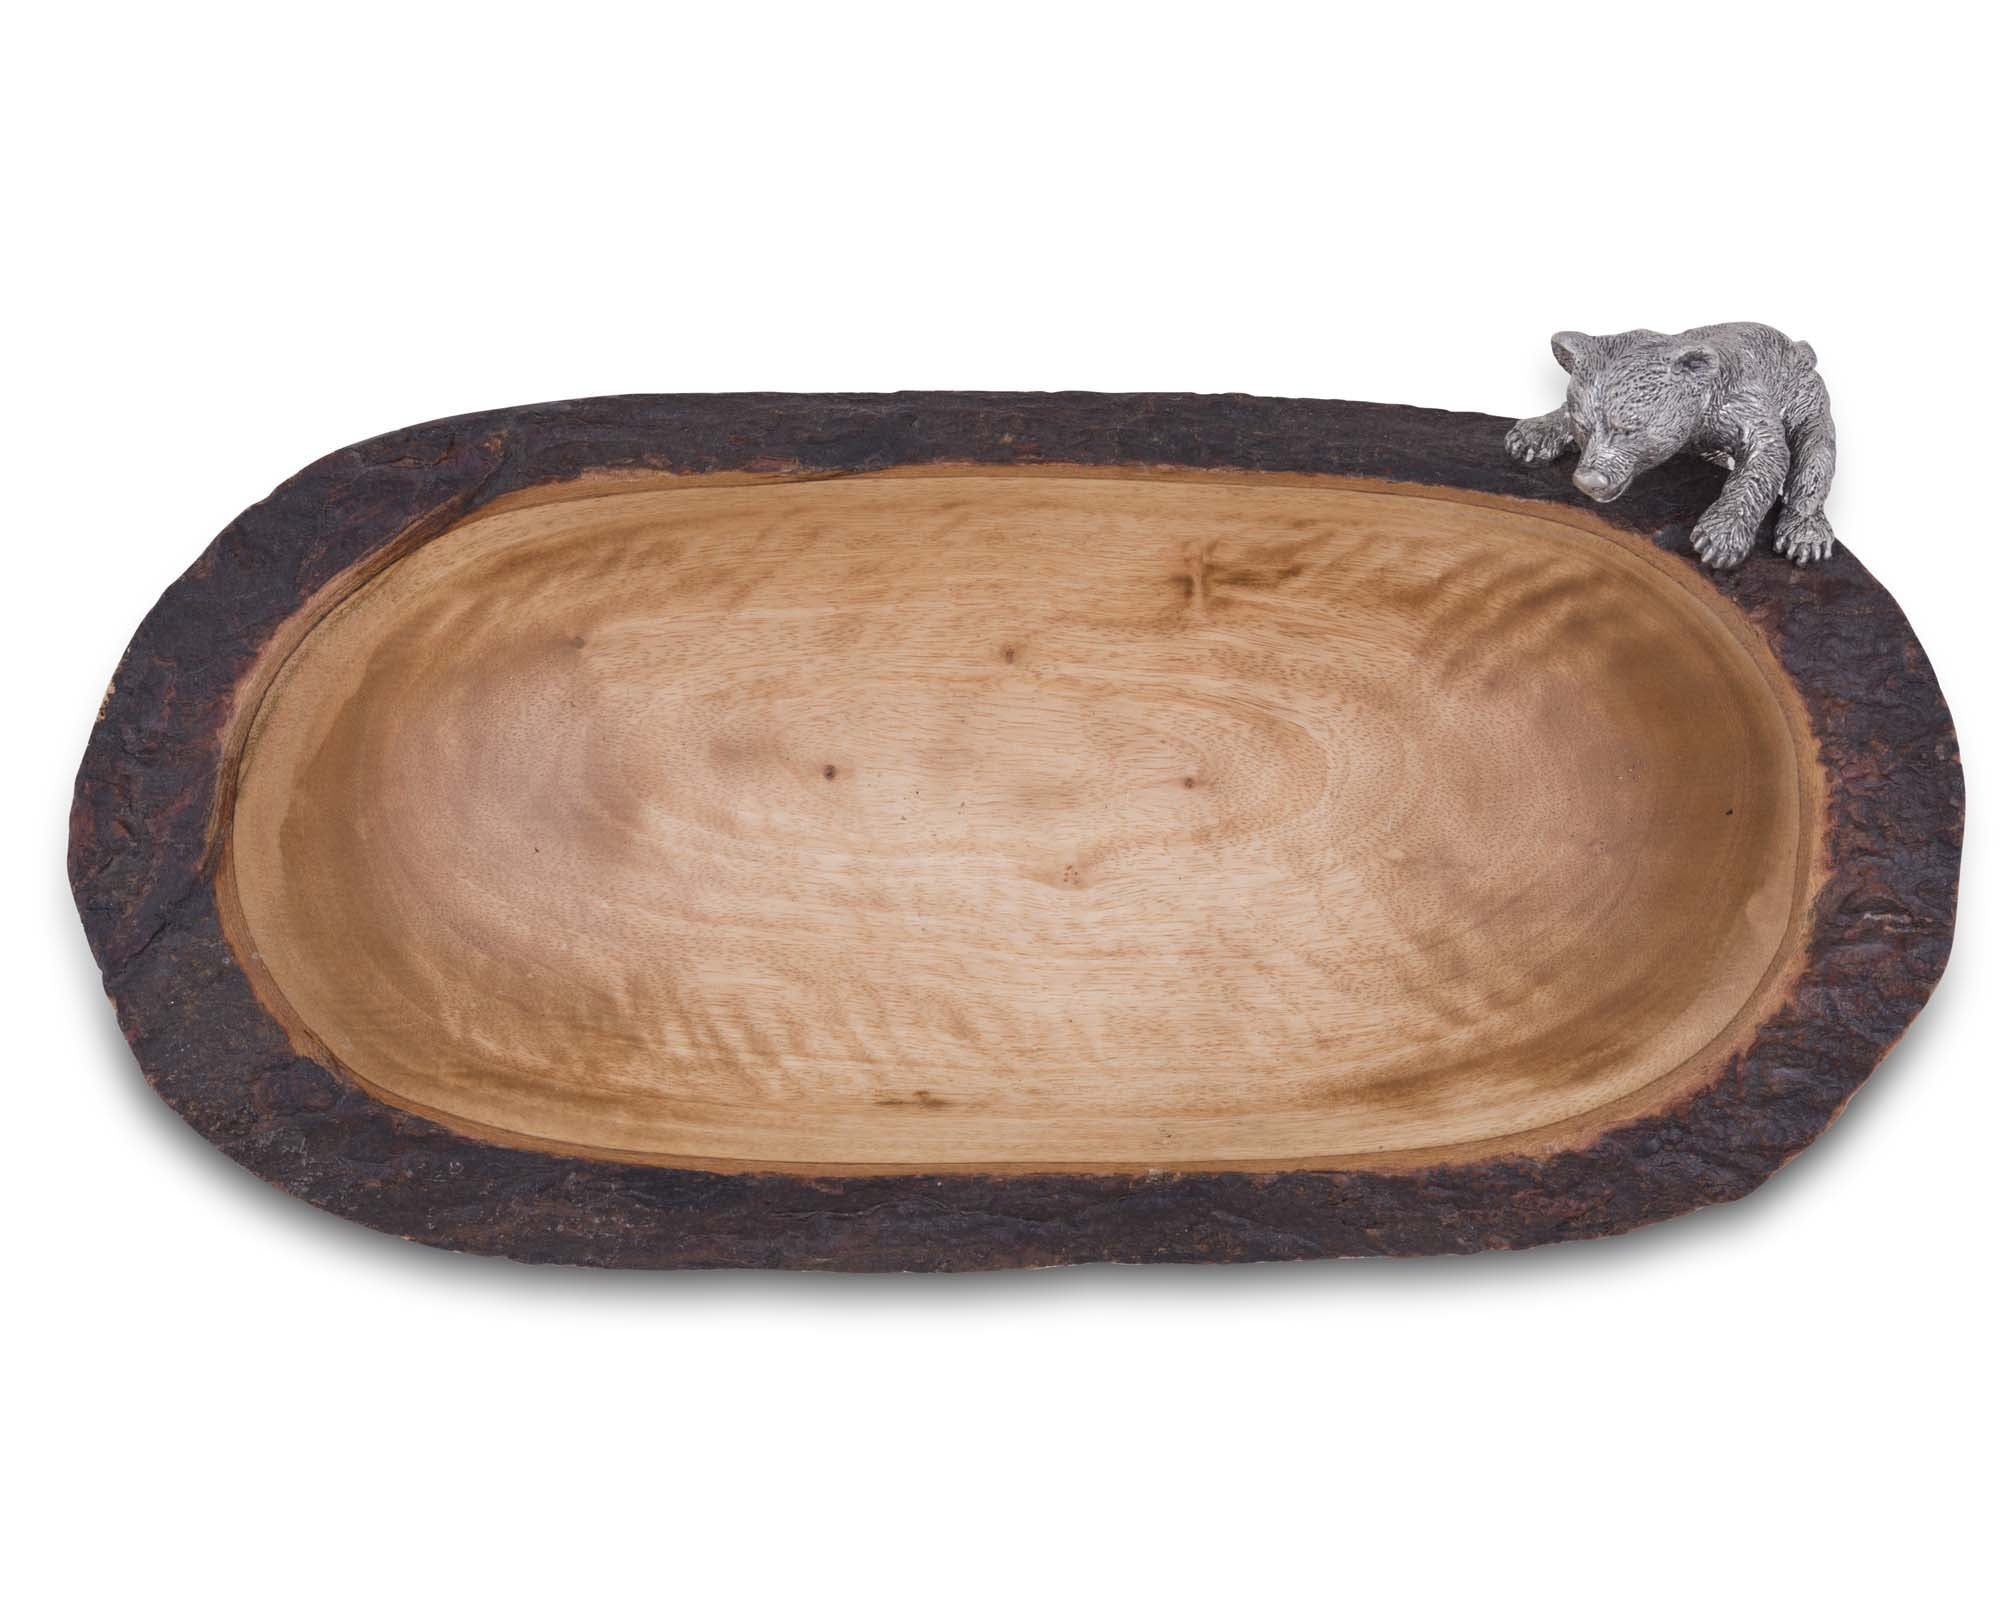 Vagabond House Bear Cub Bread Bowl Product Image